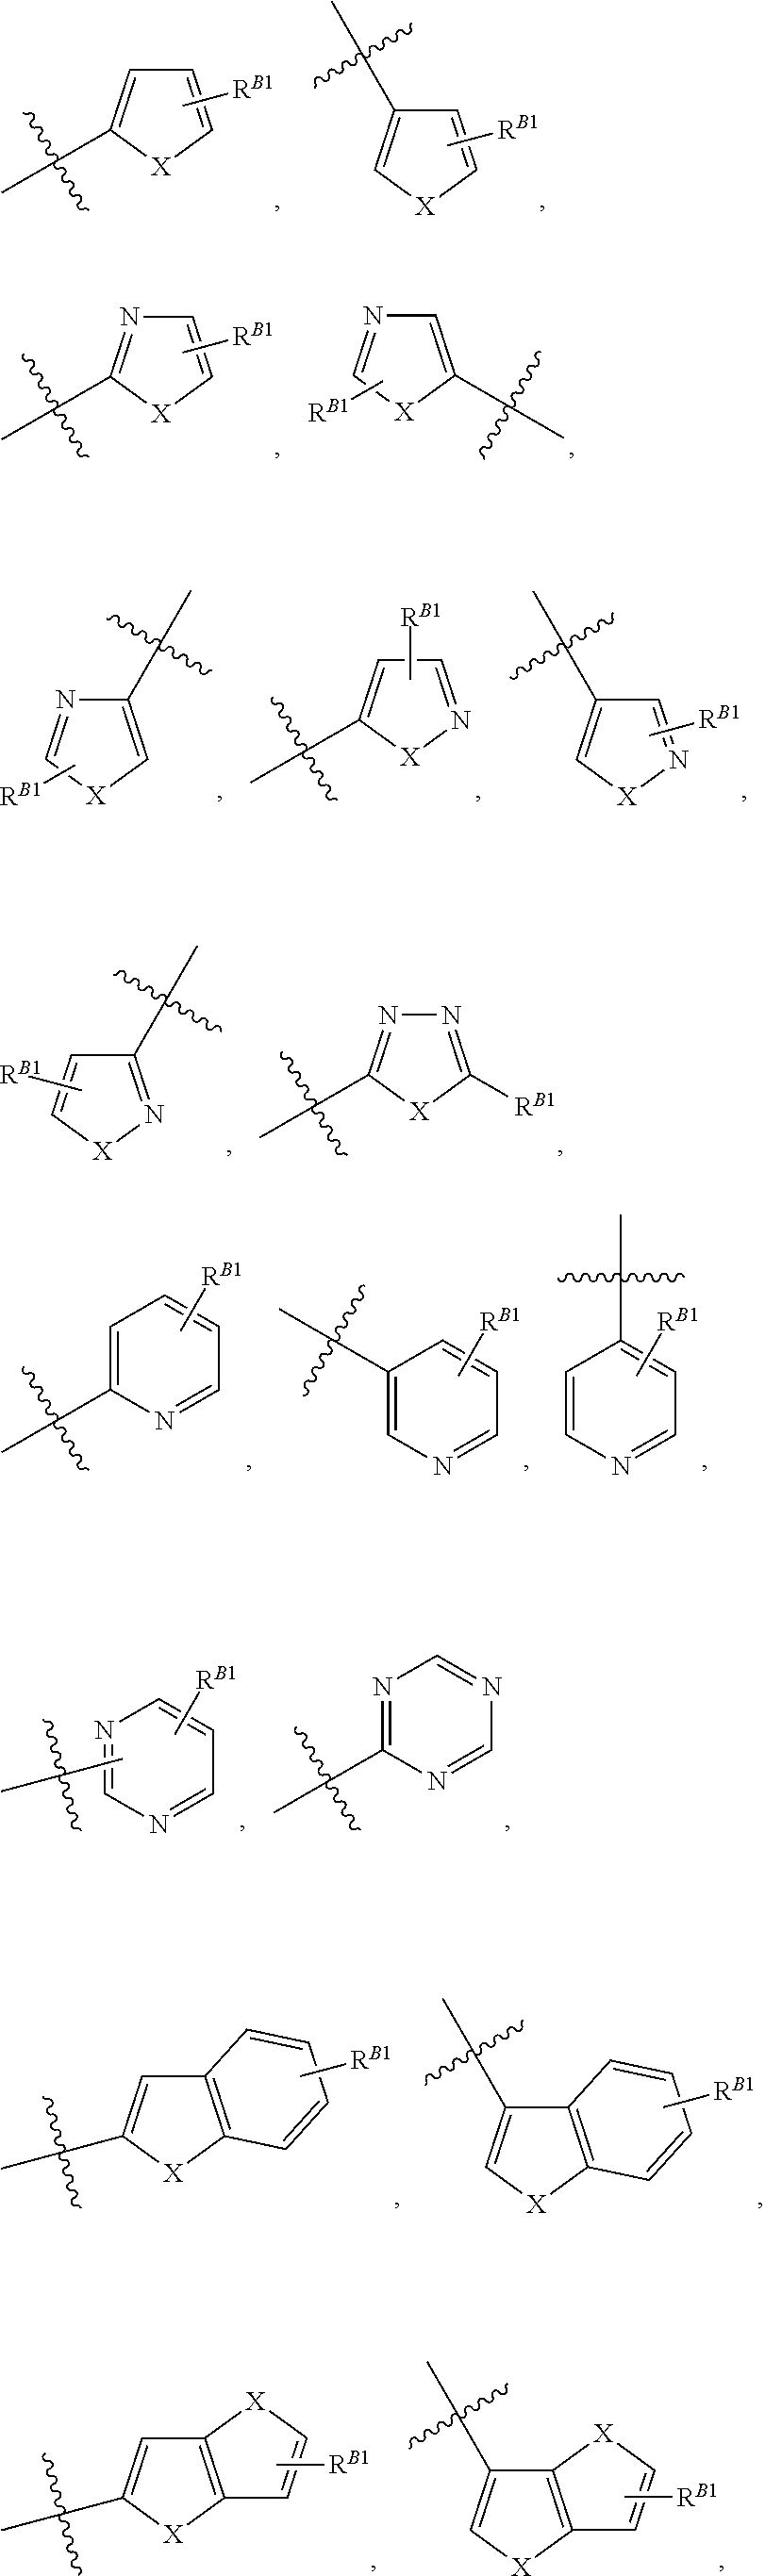 Enzymatic production of cytosinic nucleoside analogues